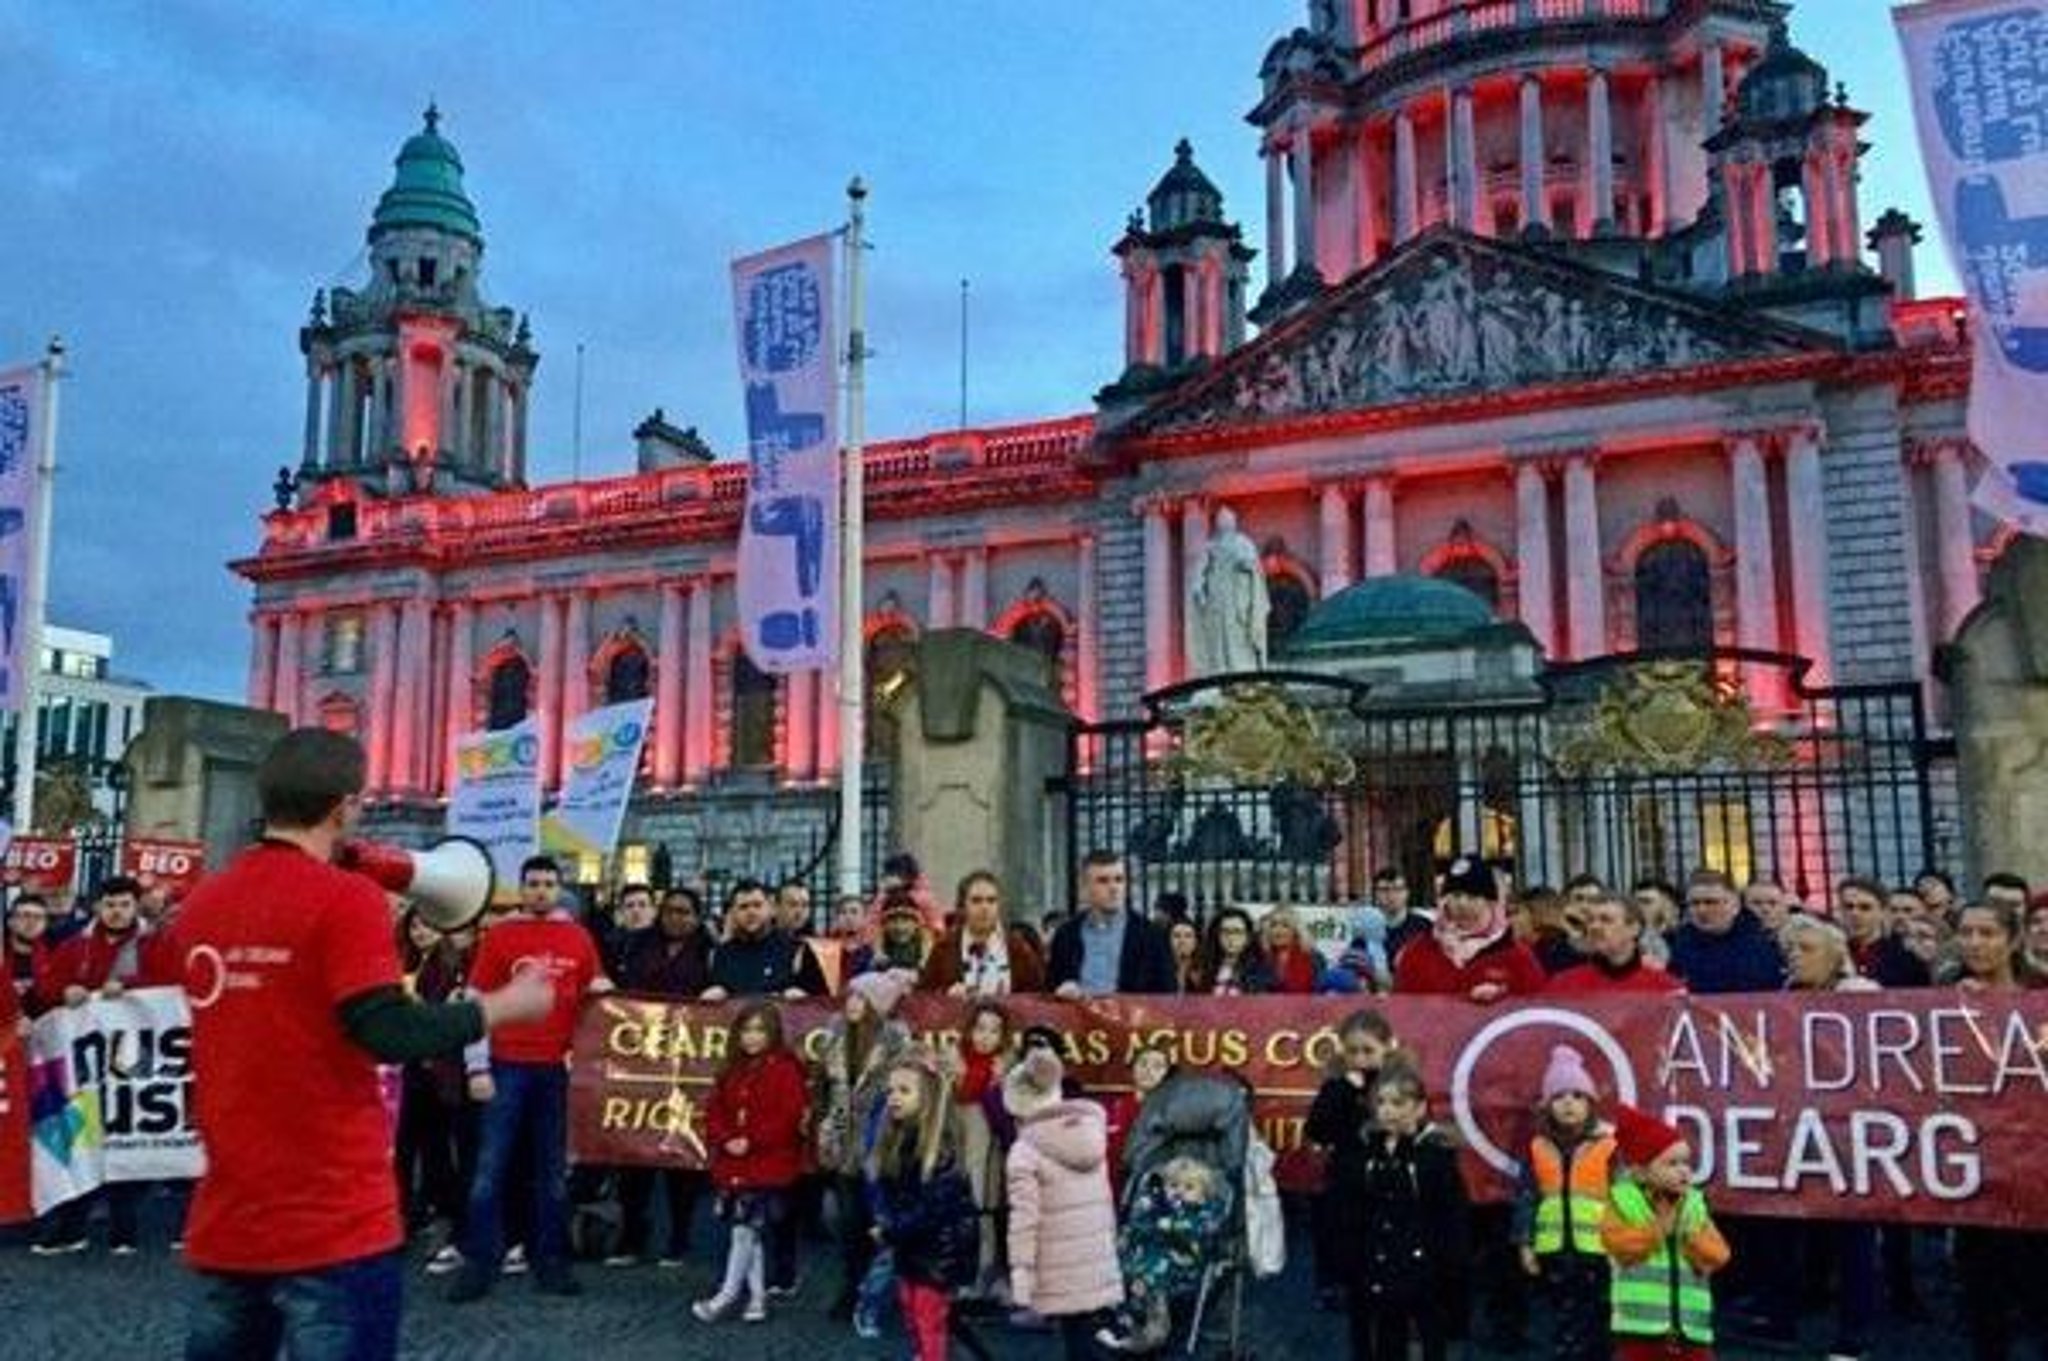 Sinn Fein misusing city hall for 'political' Irish language campaign: DUP